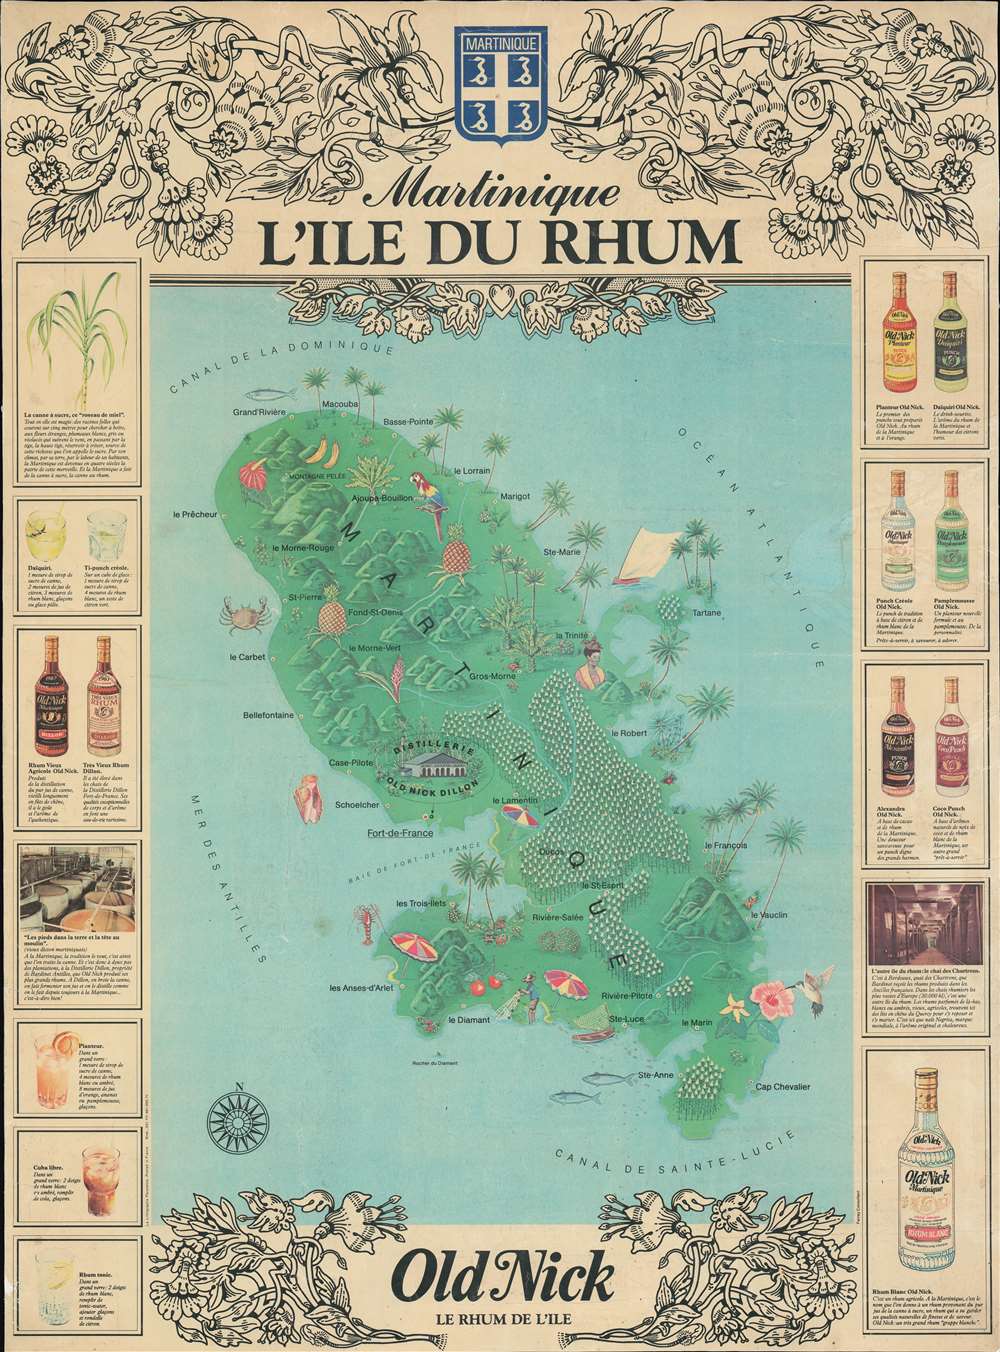 Martinique L'Ile du Rhum. - Main View